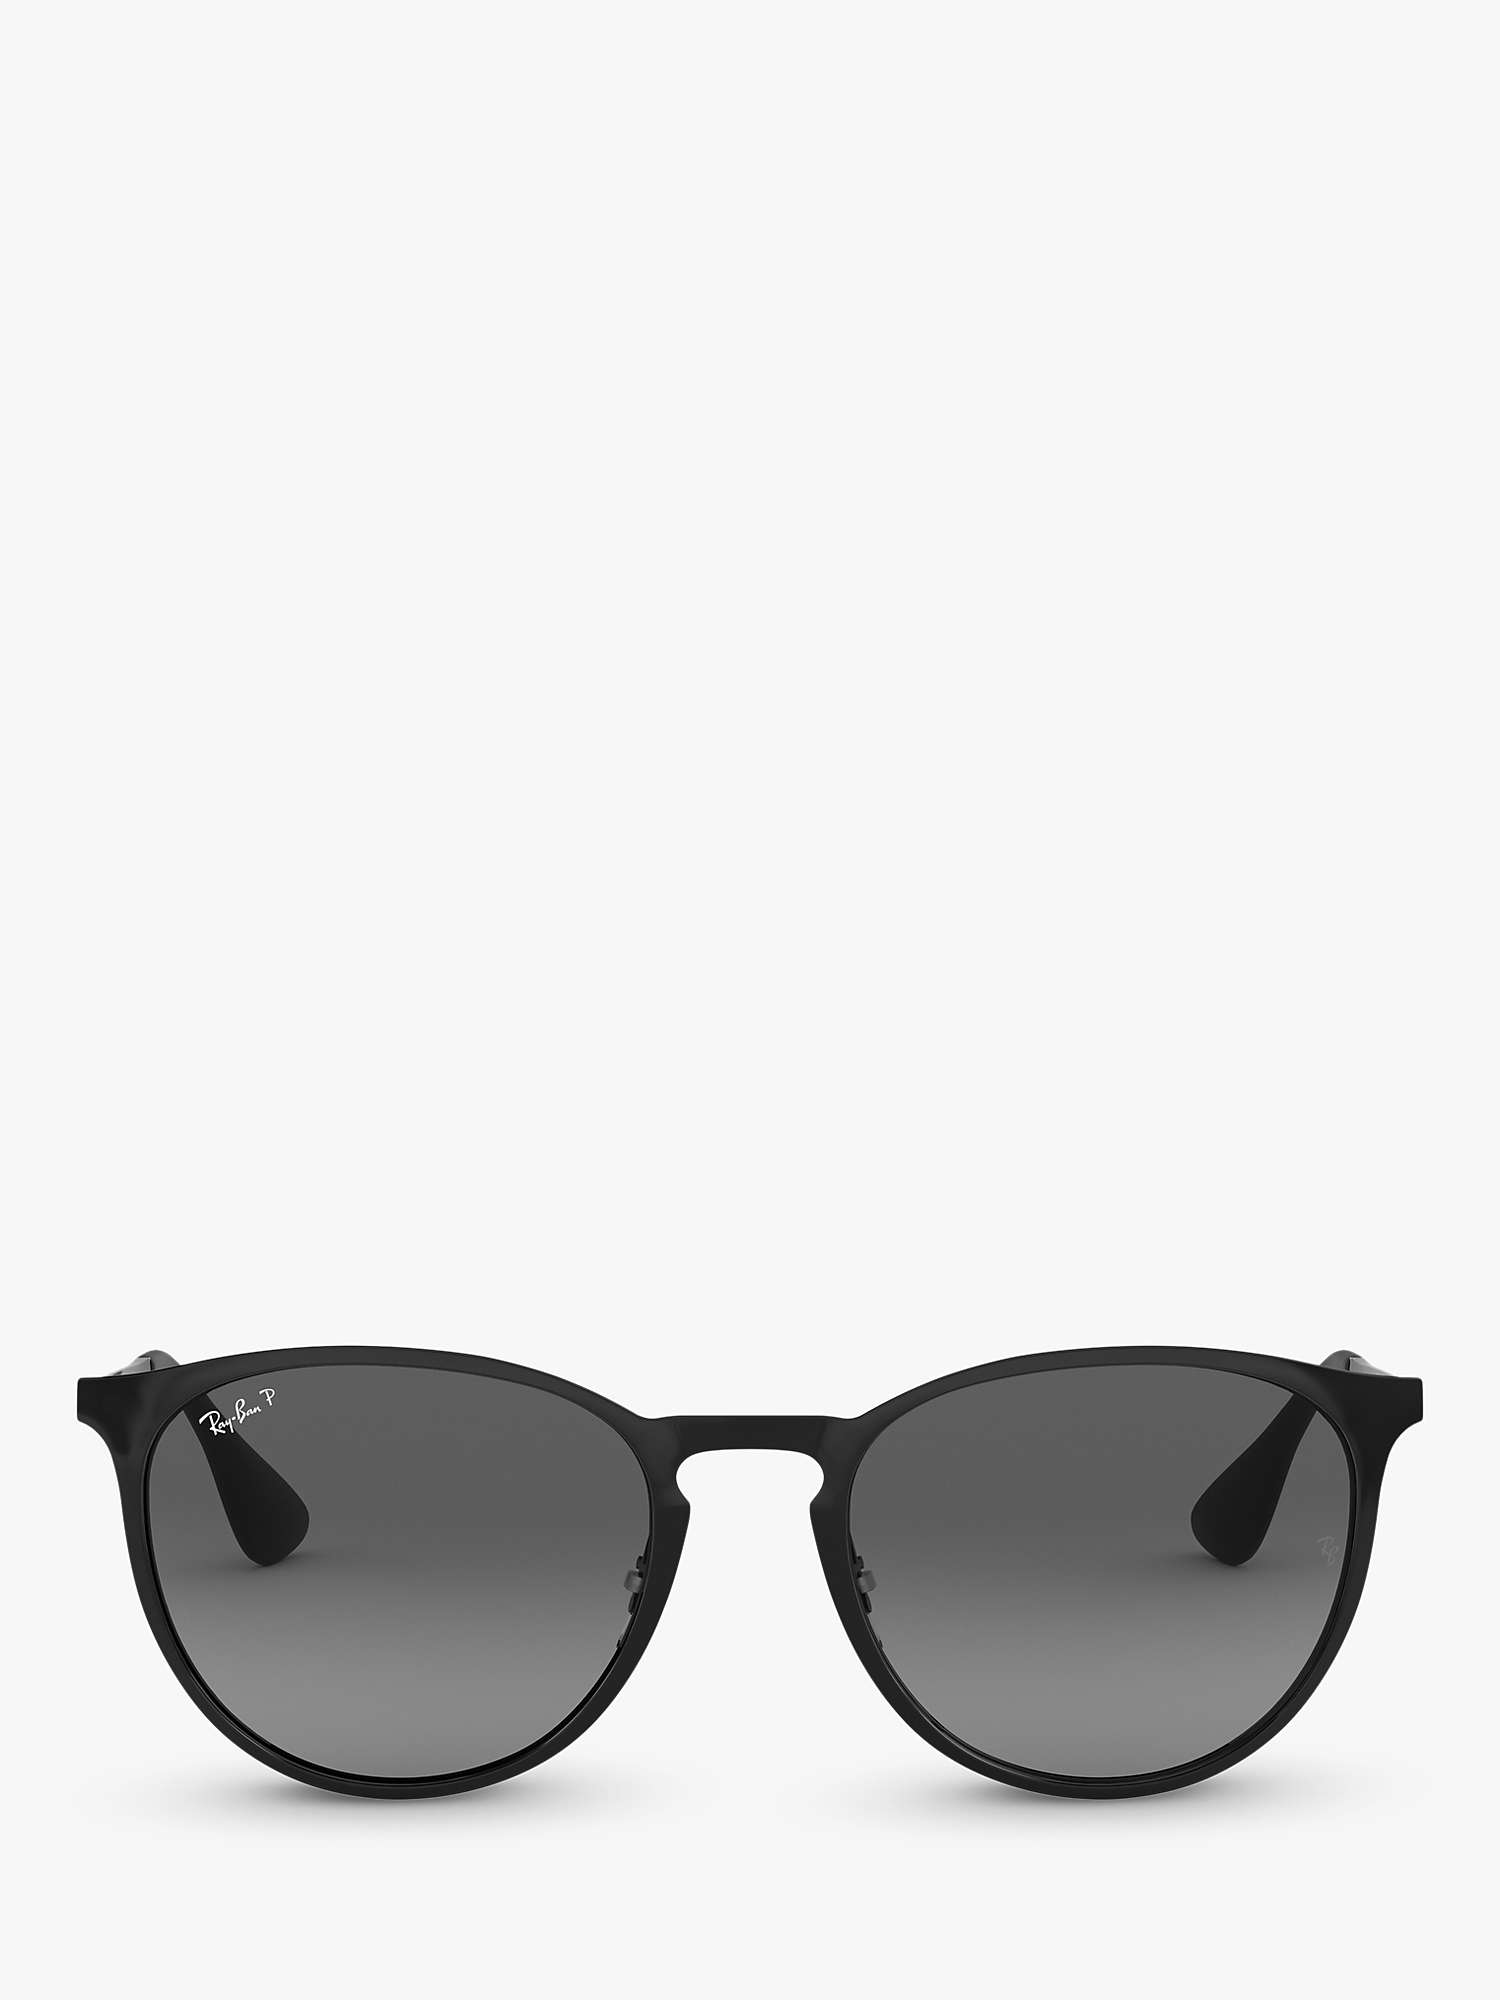 Buy Ray-Ban RB3539 Women's Erika Polarised Oval Sunglasses, Black/Grey Gradient Online at johnlewis.com